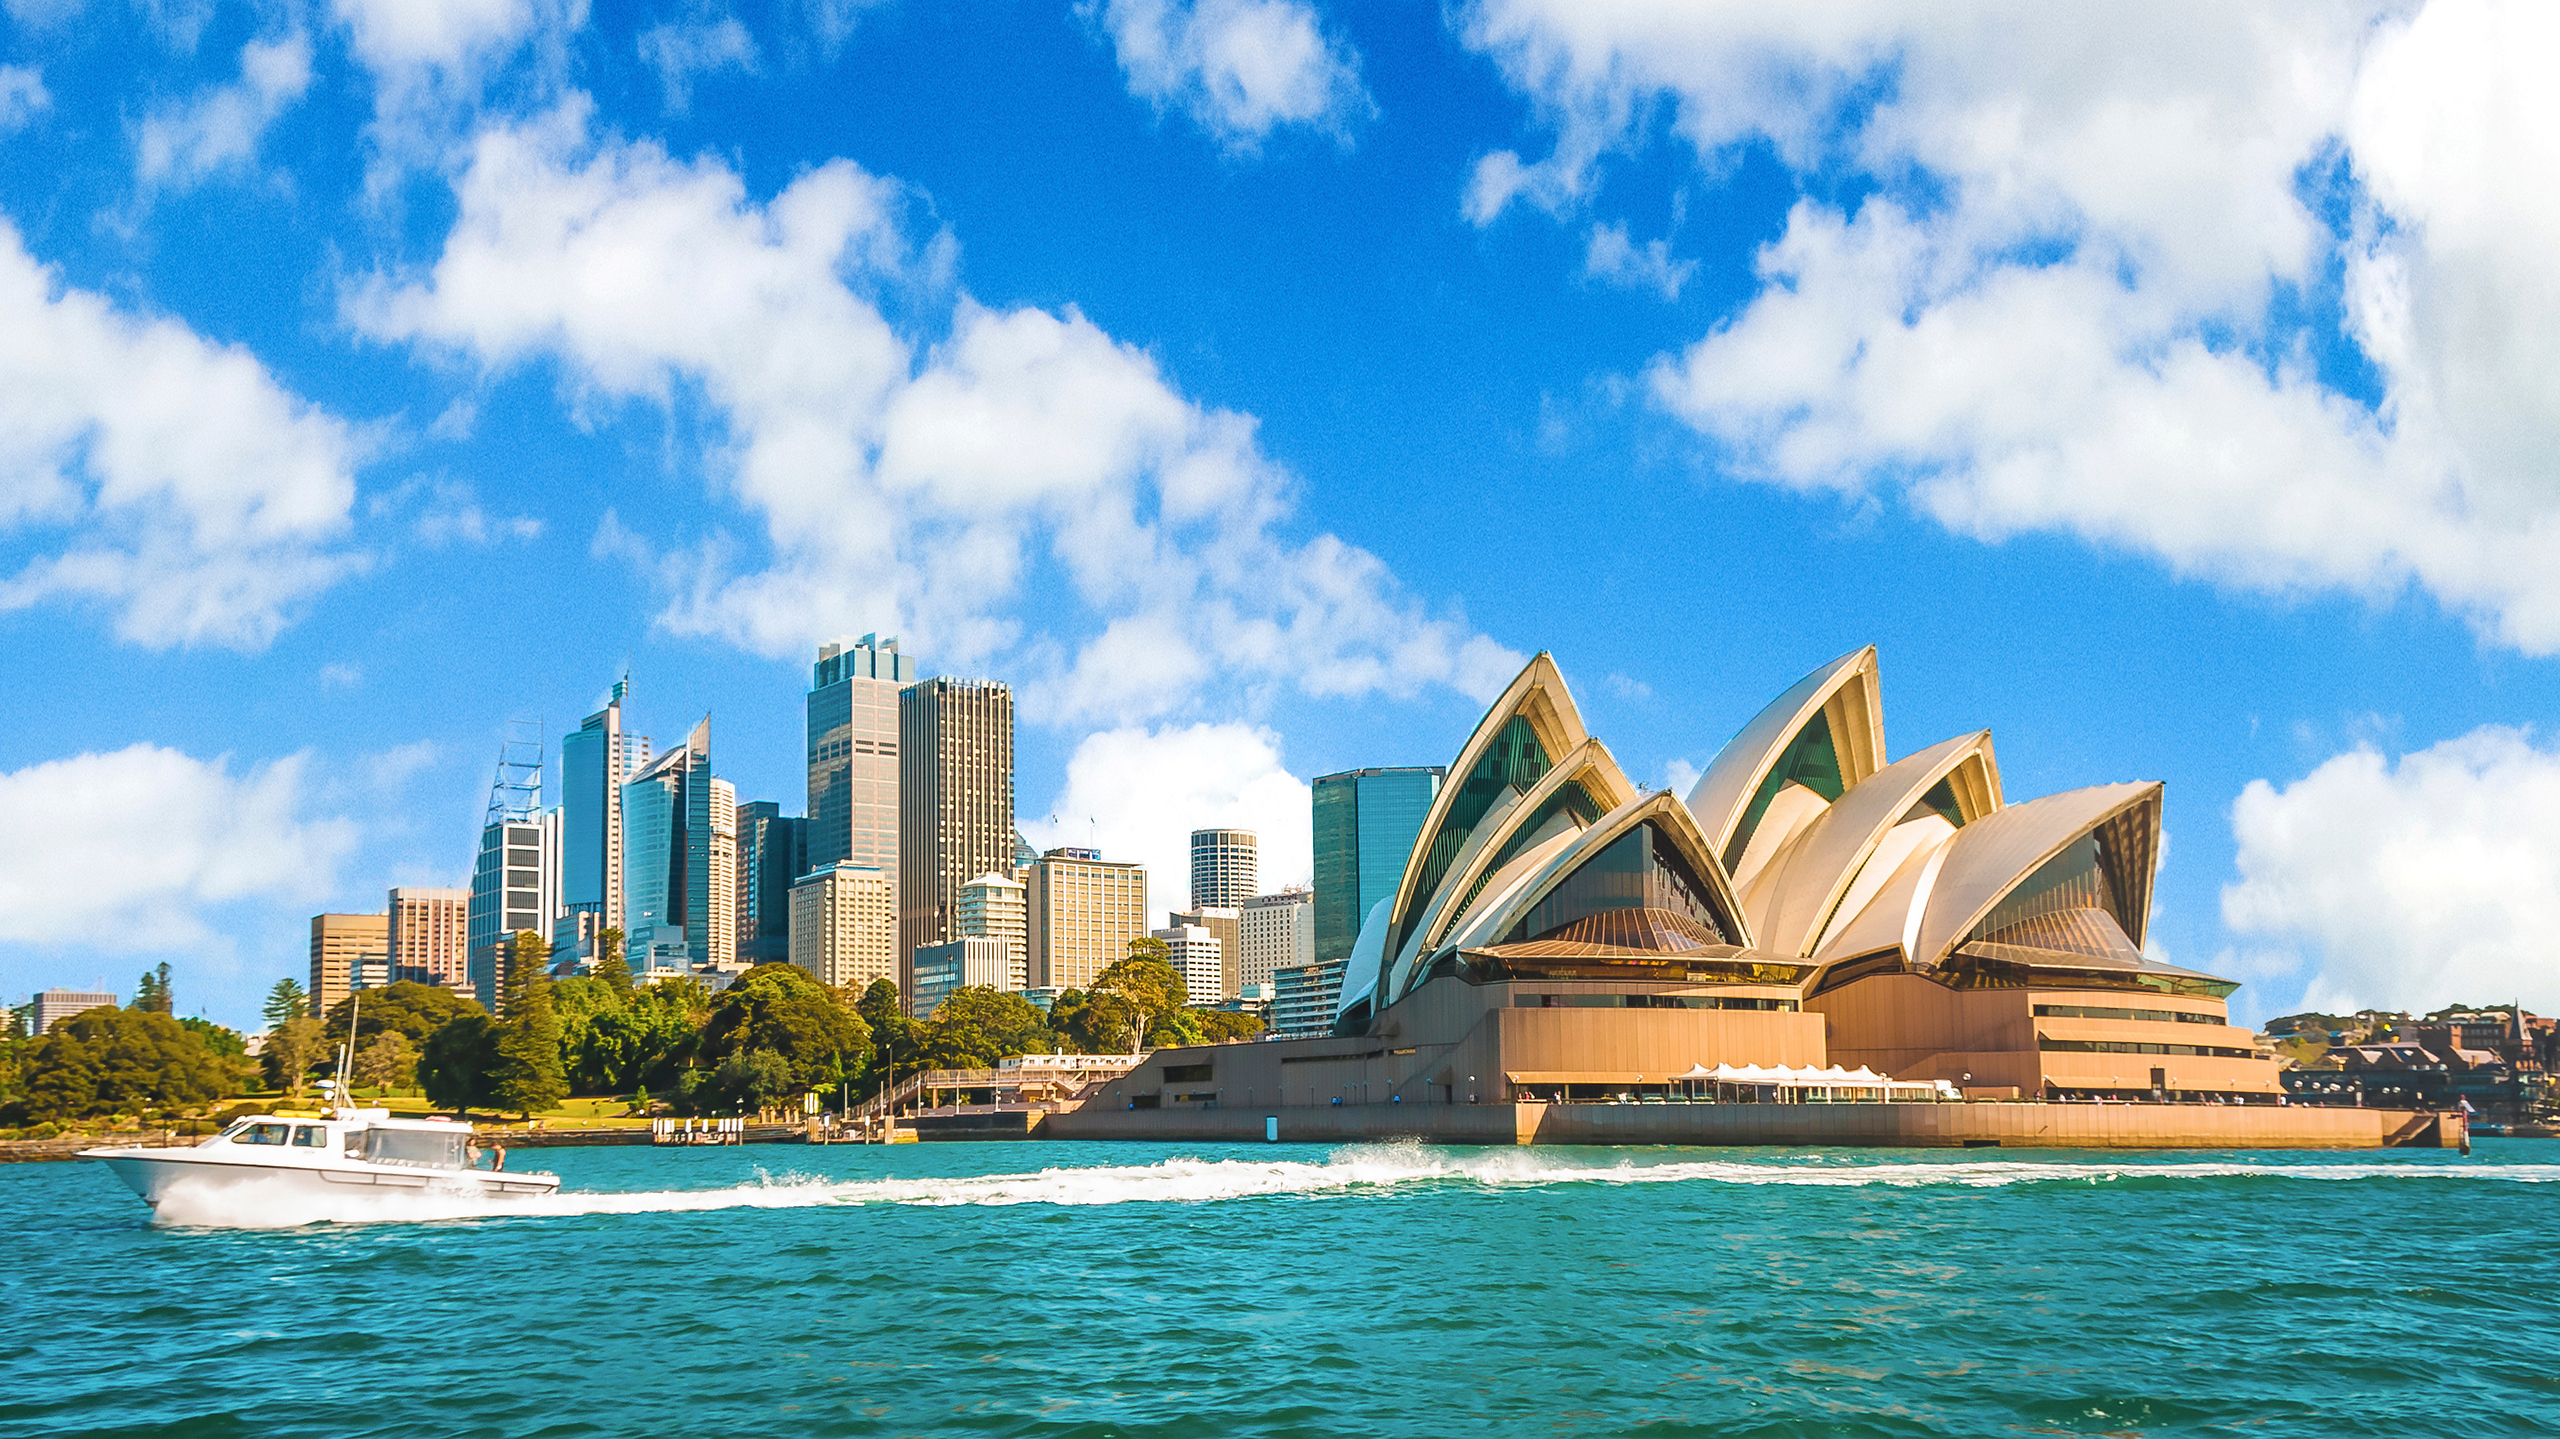 The city skyline of Sydney, Australia. Circular Quay and Opera House.